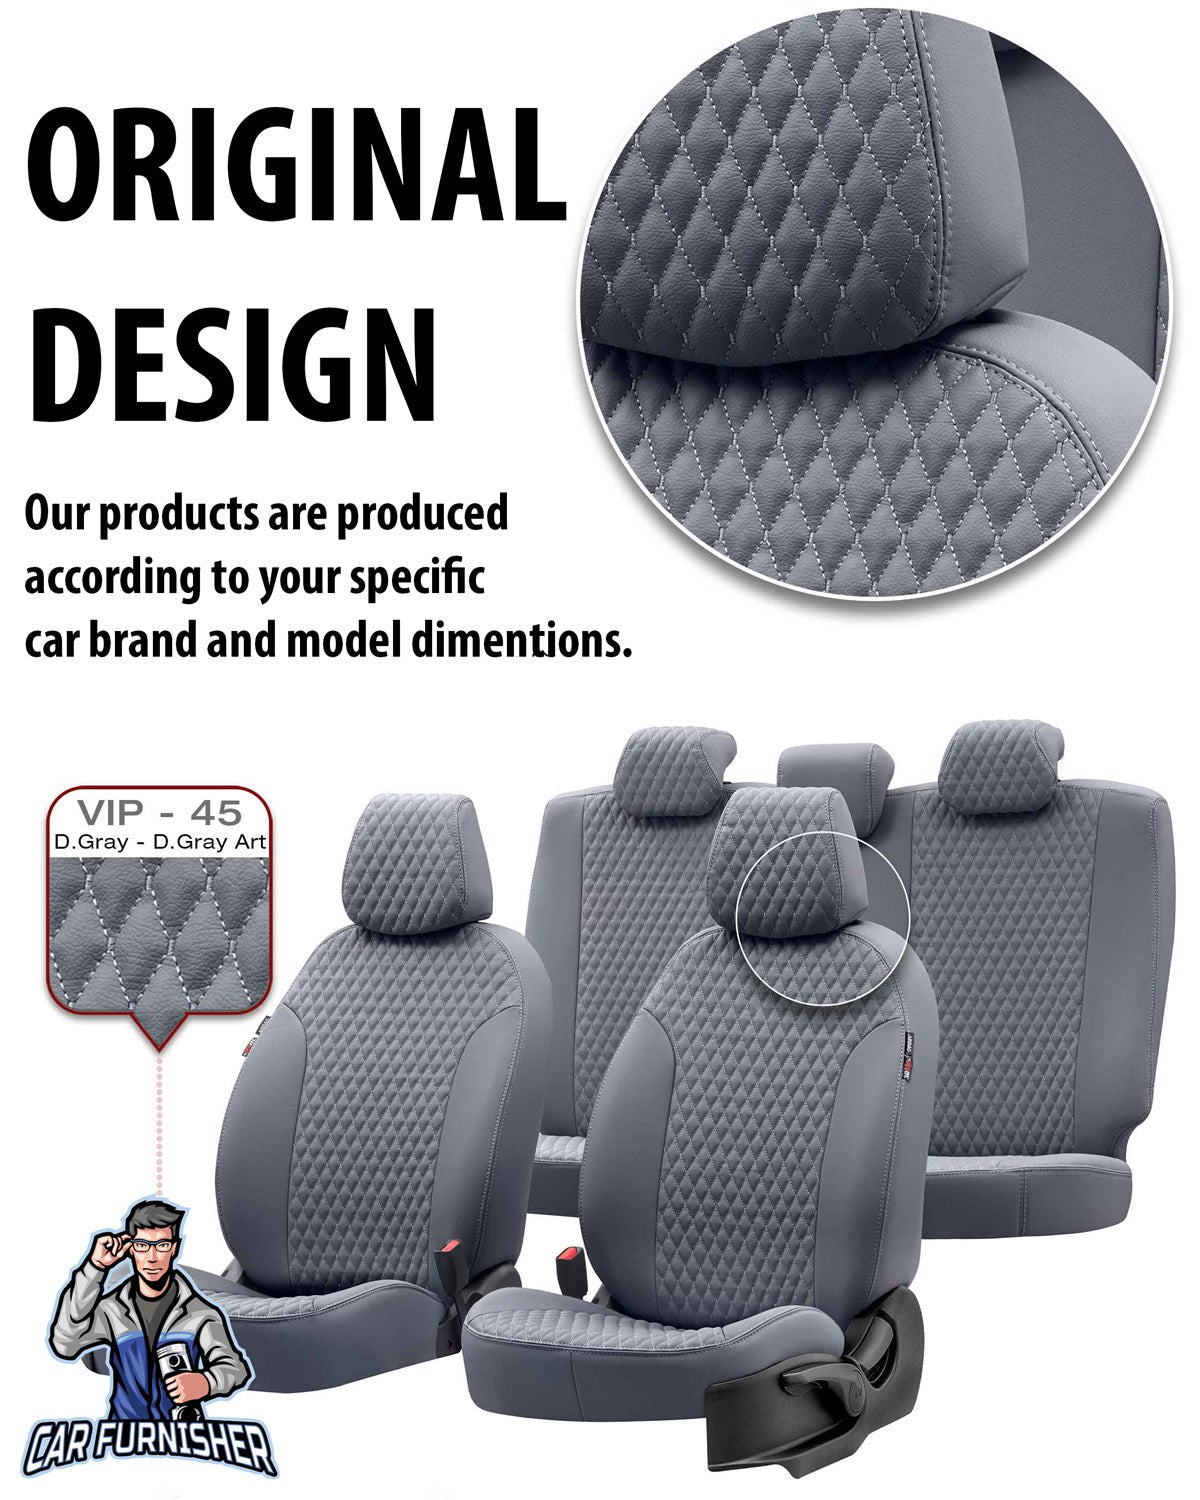 Mercedes S Series Car Seat Covers 1991-2013 Amsterdam Design Ivory Full Set (5 Seats + Handrest) Full Leather